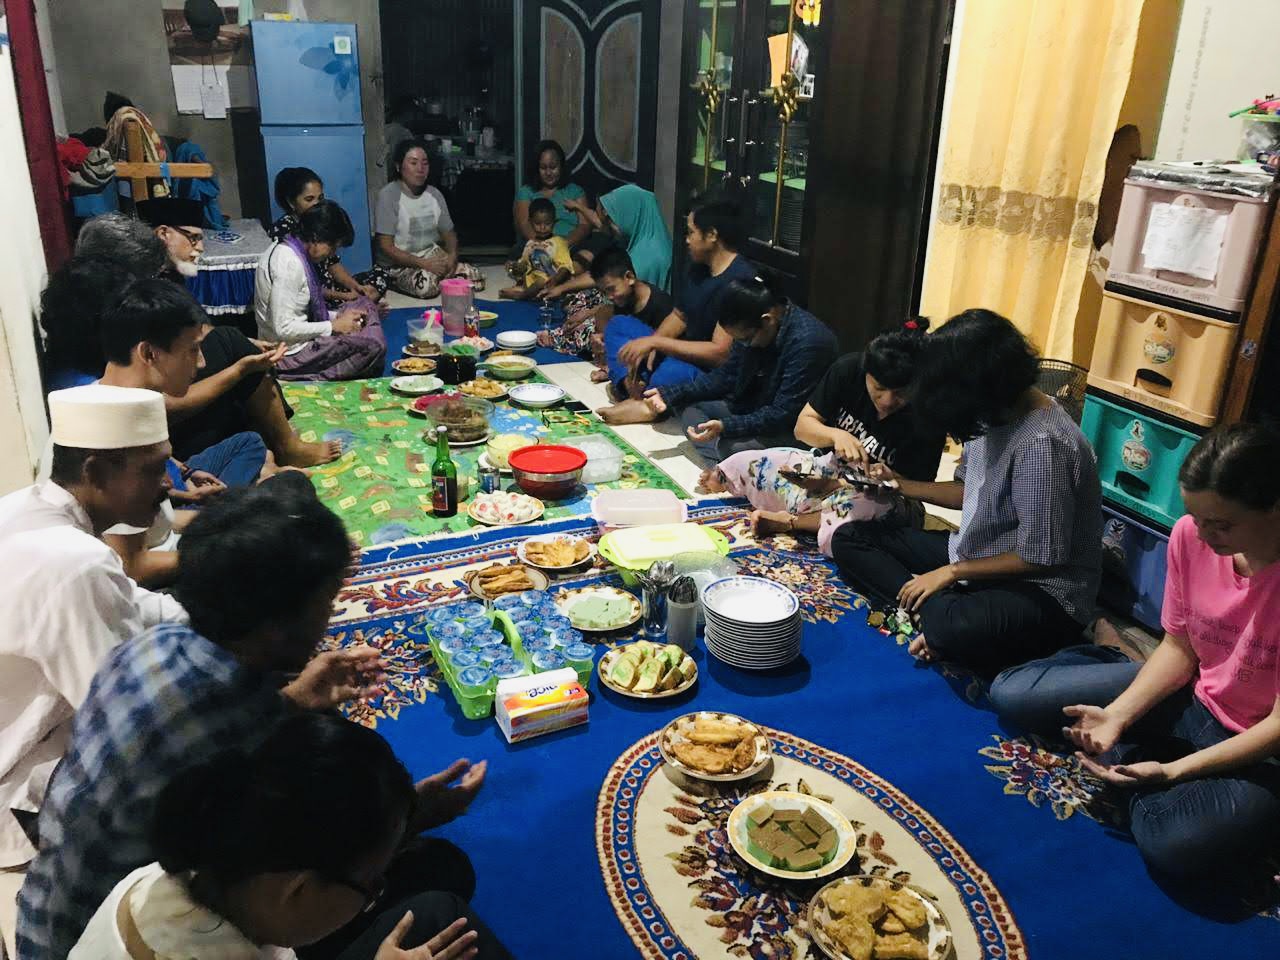 5 Intriguing Ways Indonesians Celebrate Ramadan Differently than Arabs